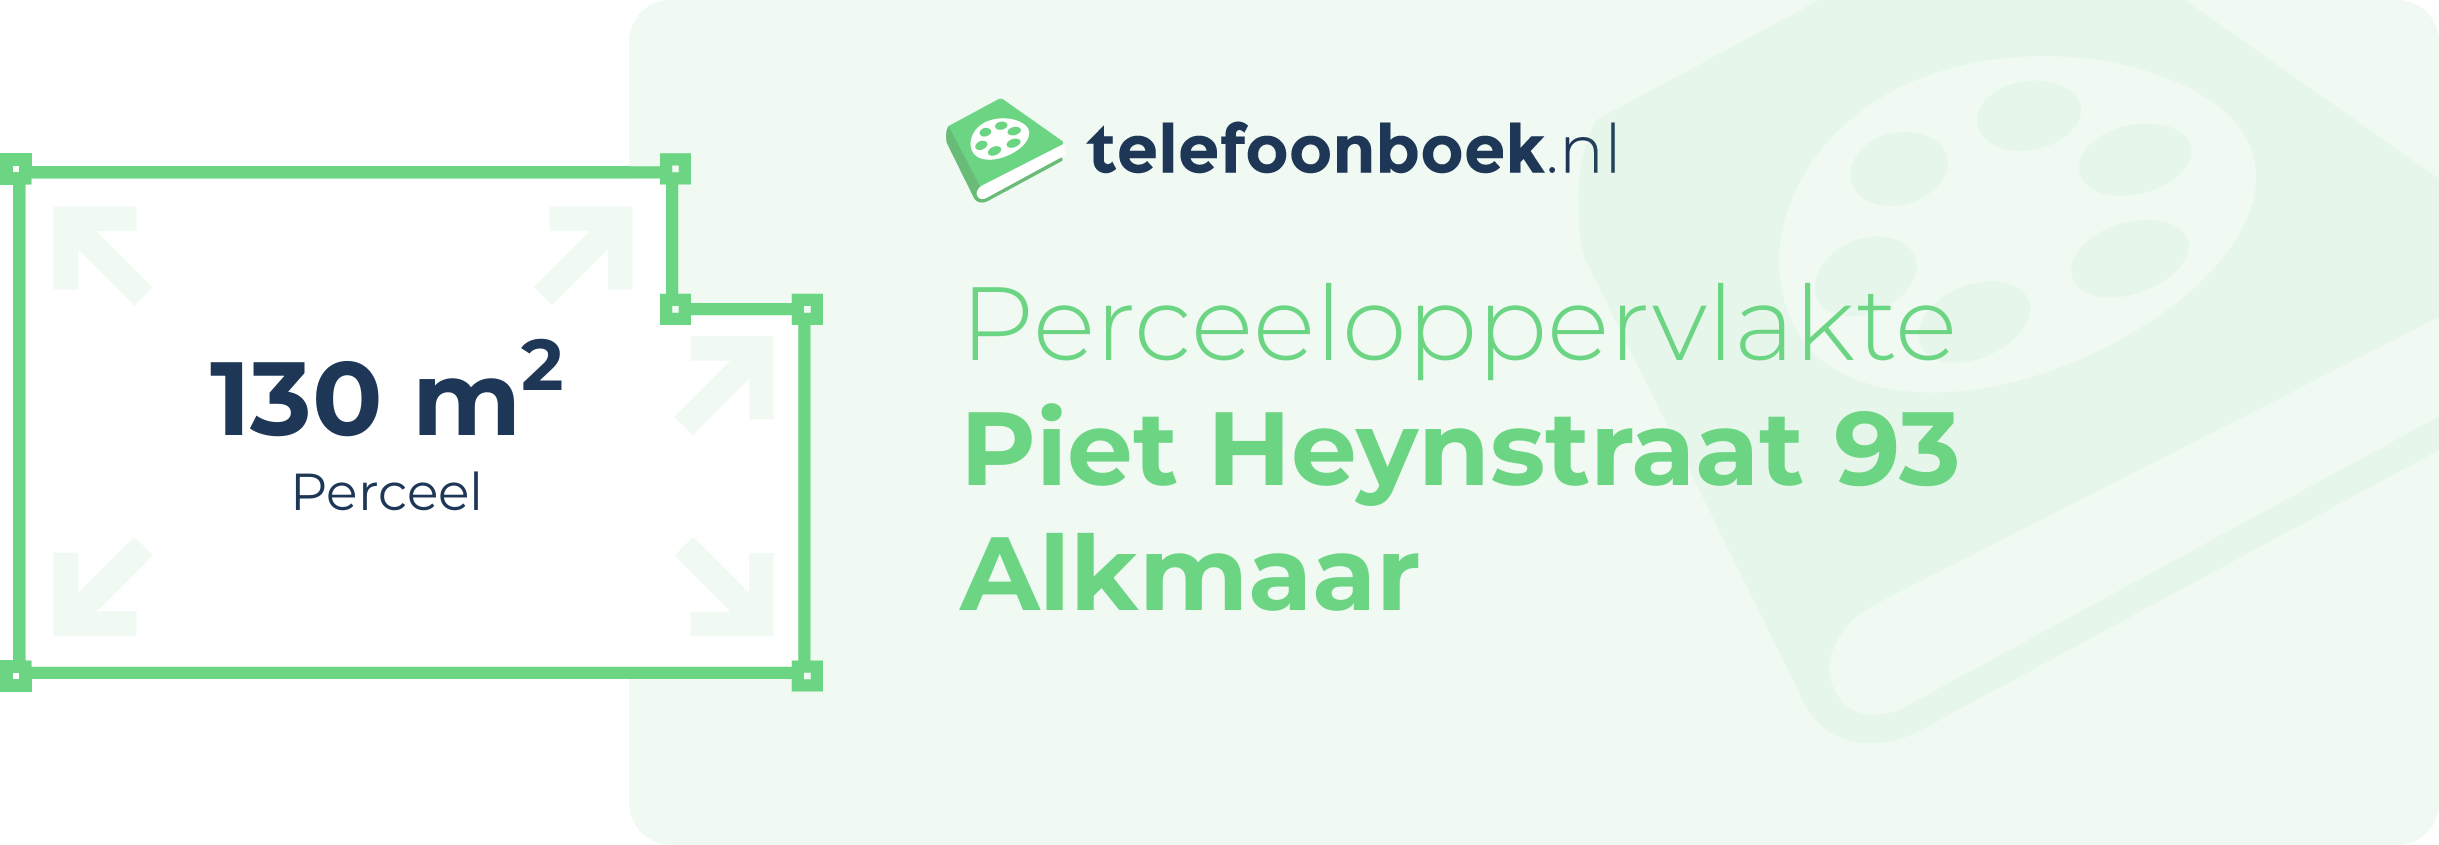 Perceeloppervlakte Piet Heynstraat 93 Alkmaar